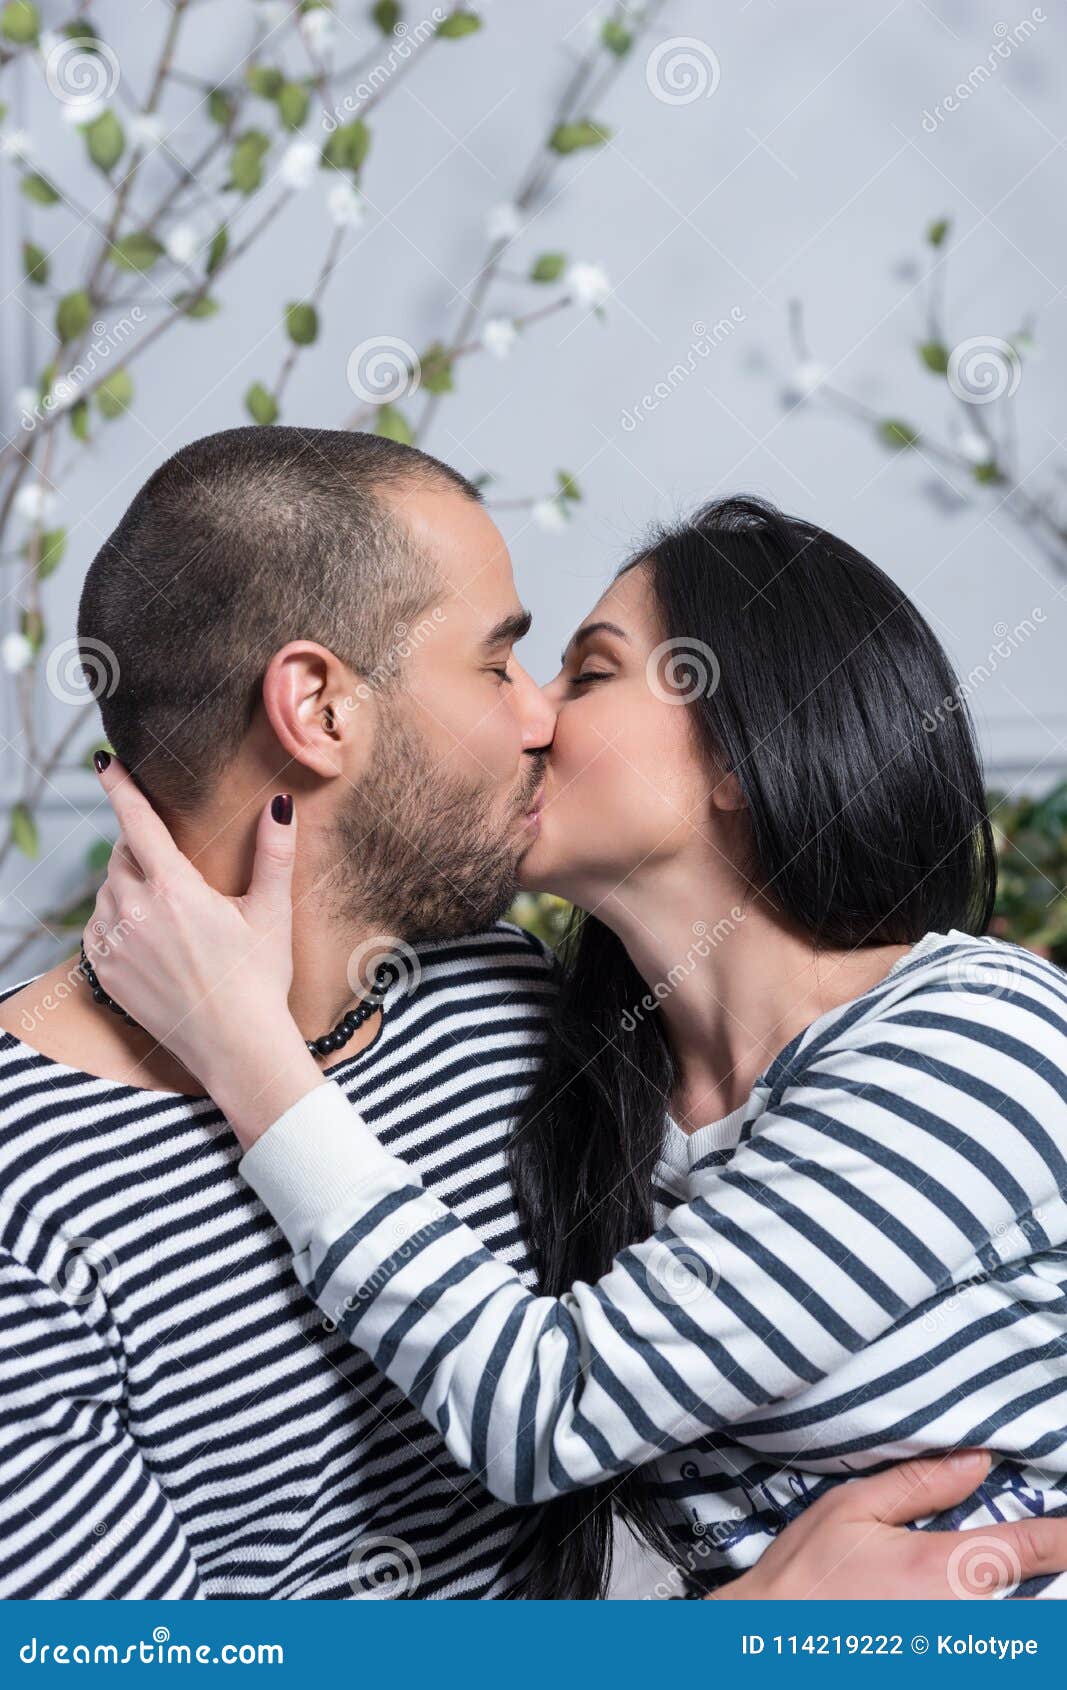 https://thumbs.dreamstime.com/z/charming-international-couple-striped-sweaters-kissing-hu-charming-international-couple-striped-sweaters-kissing-114219222.jpg